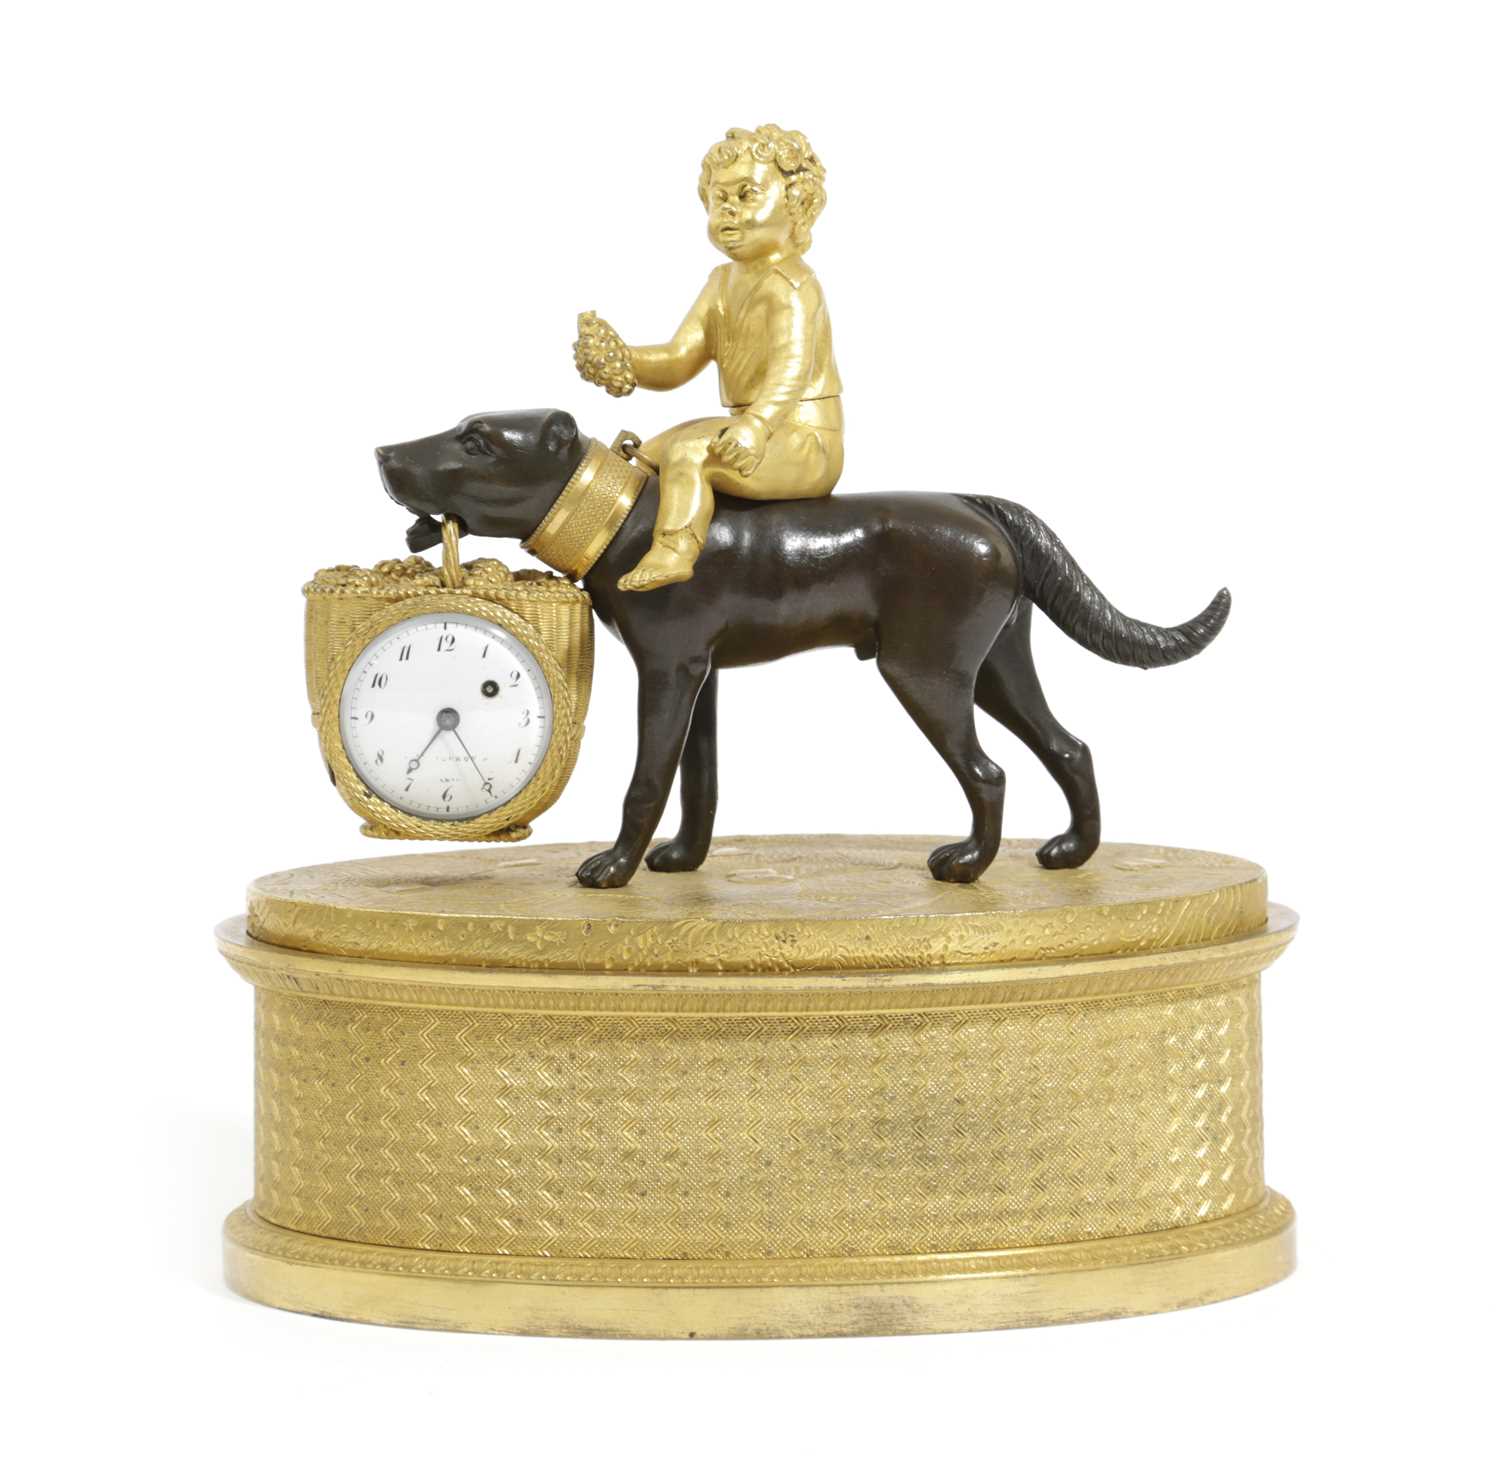 AN EMPIRE GILT AND PATINATED BRONZE CLOCK DESKSTAND C.1820 modelled as a child sat astride a dog